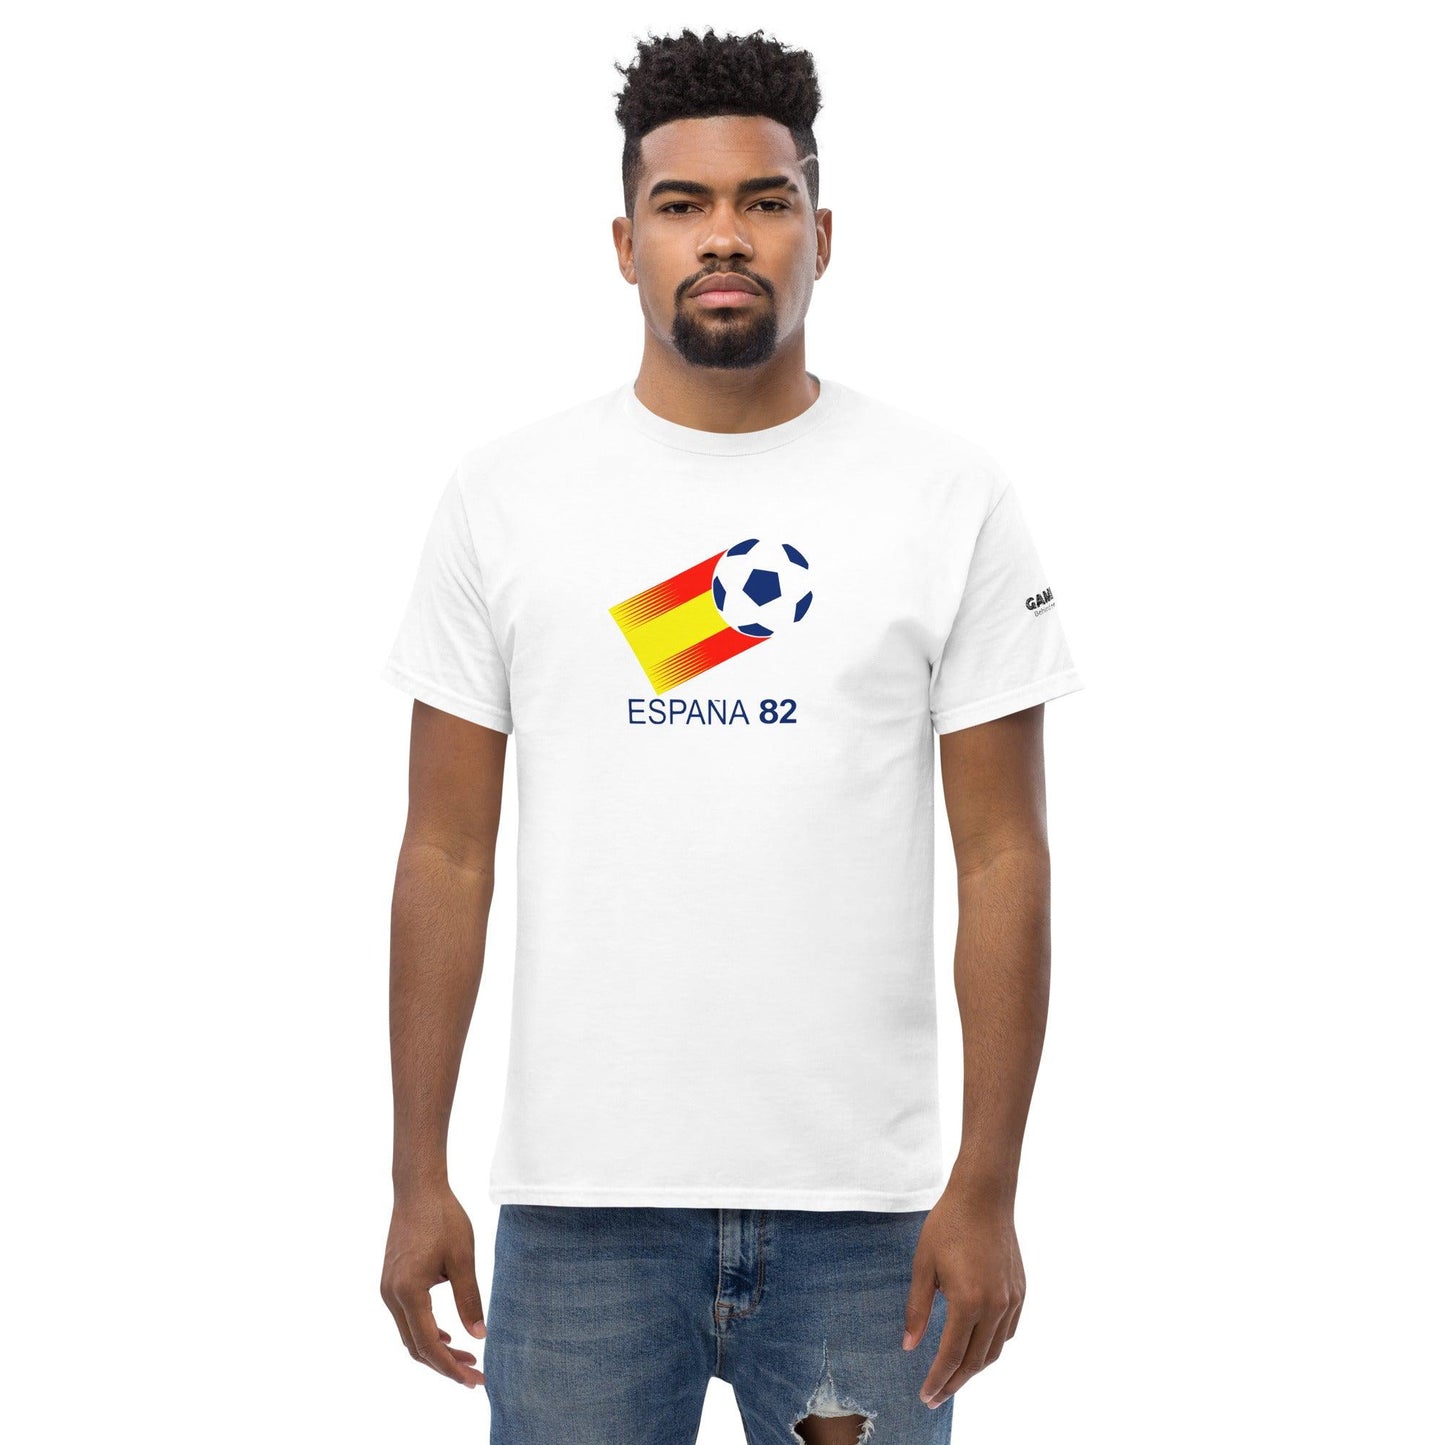 Espana World Cup 82 t-shirt by game yarns